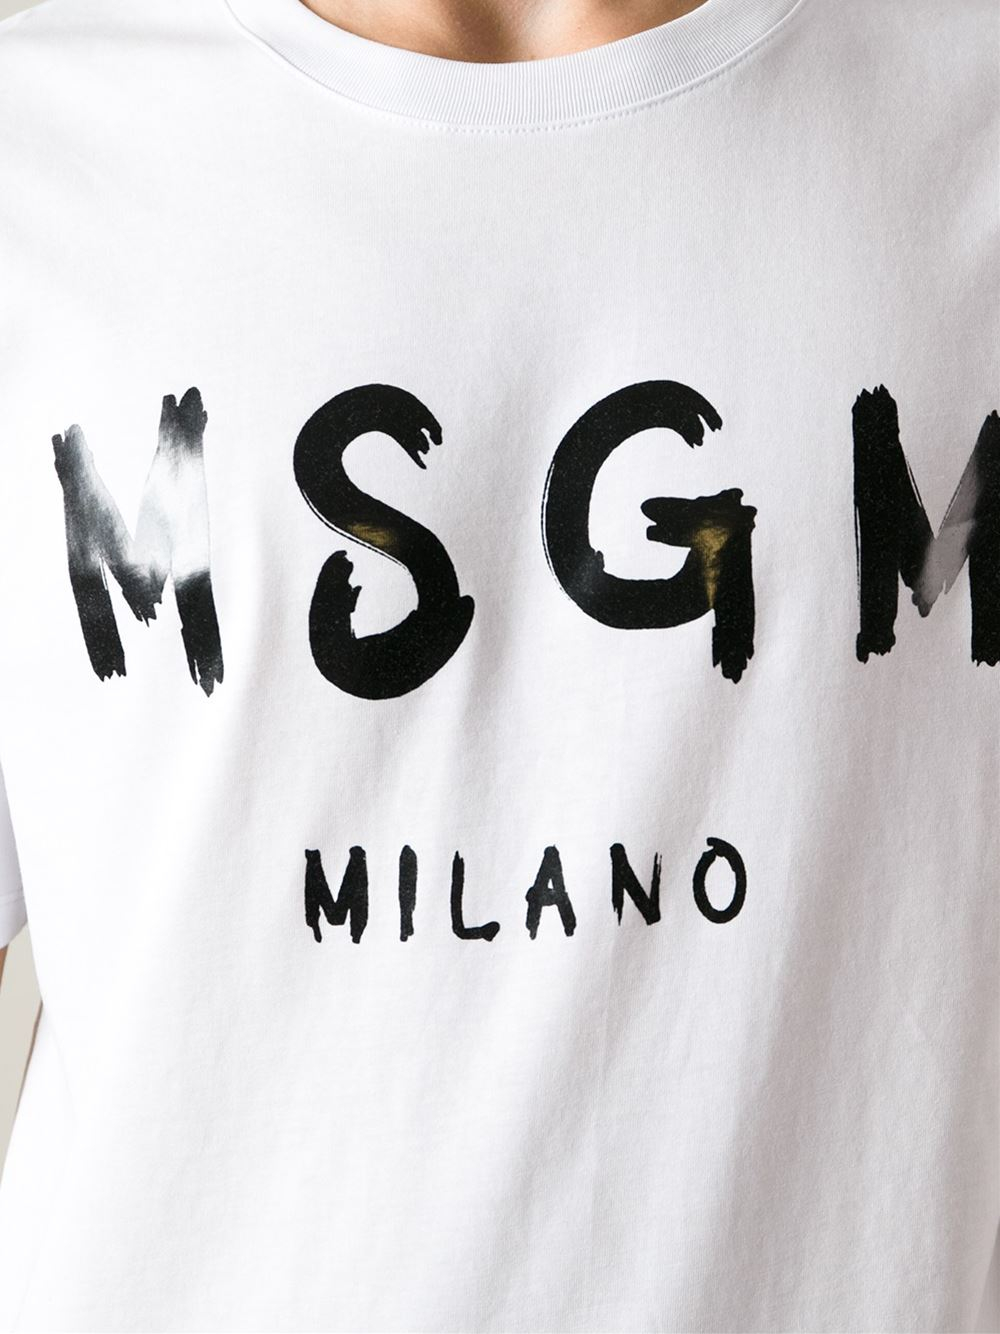 Lyst - Msgm Milano Logo Printed T-Shirt in White for Men